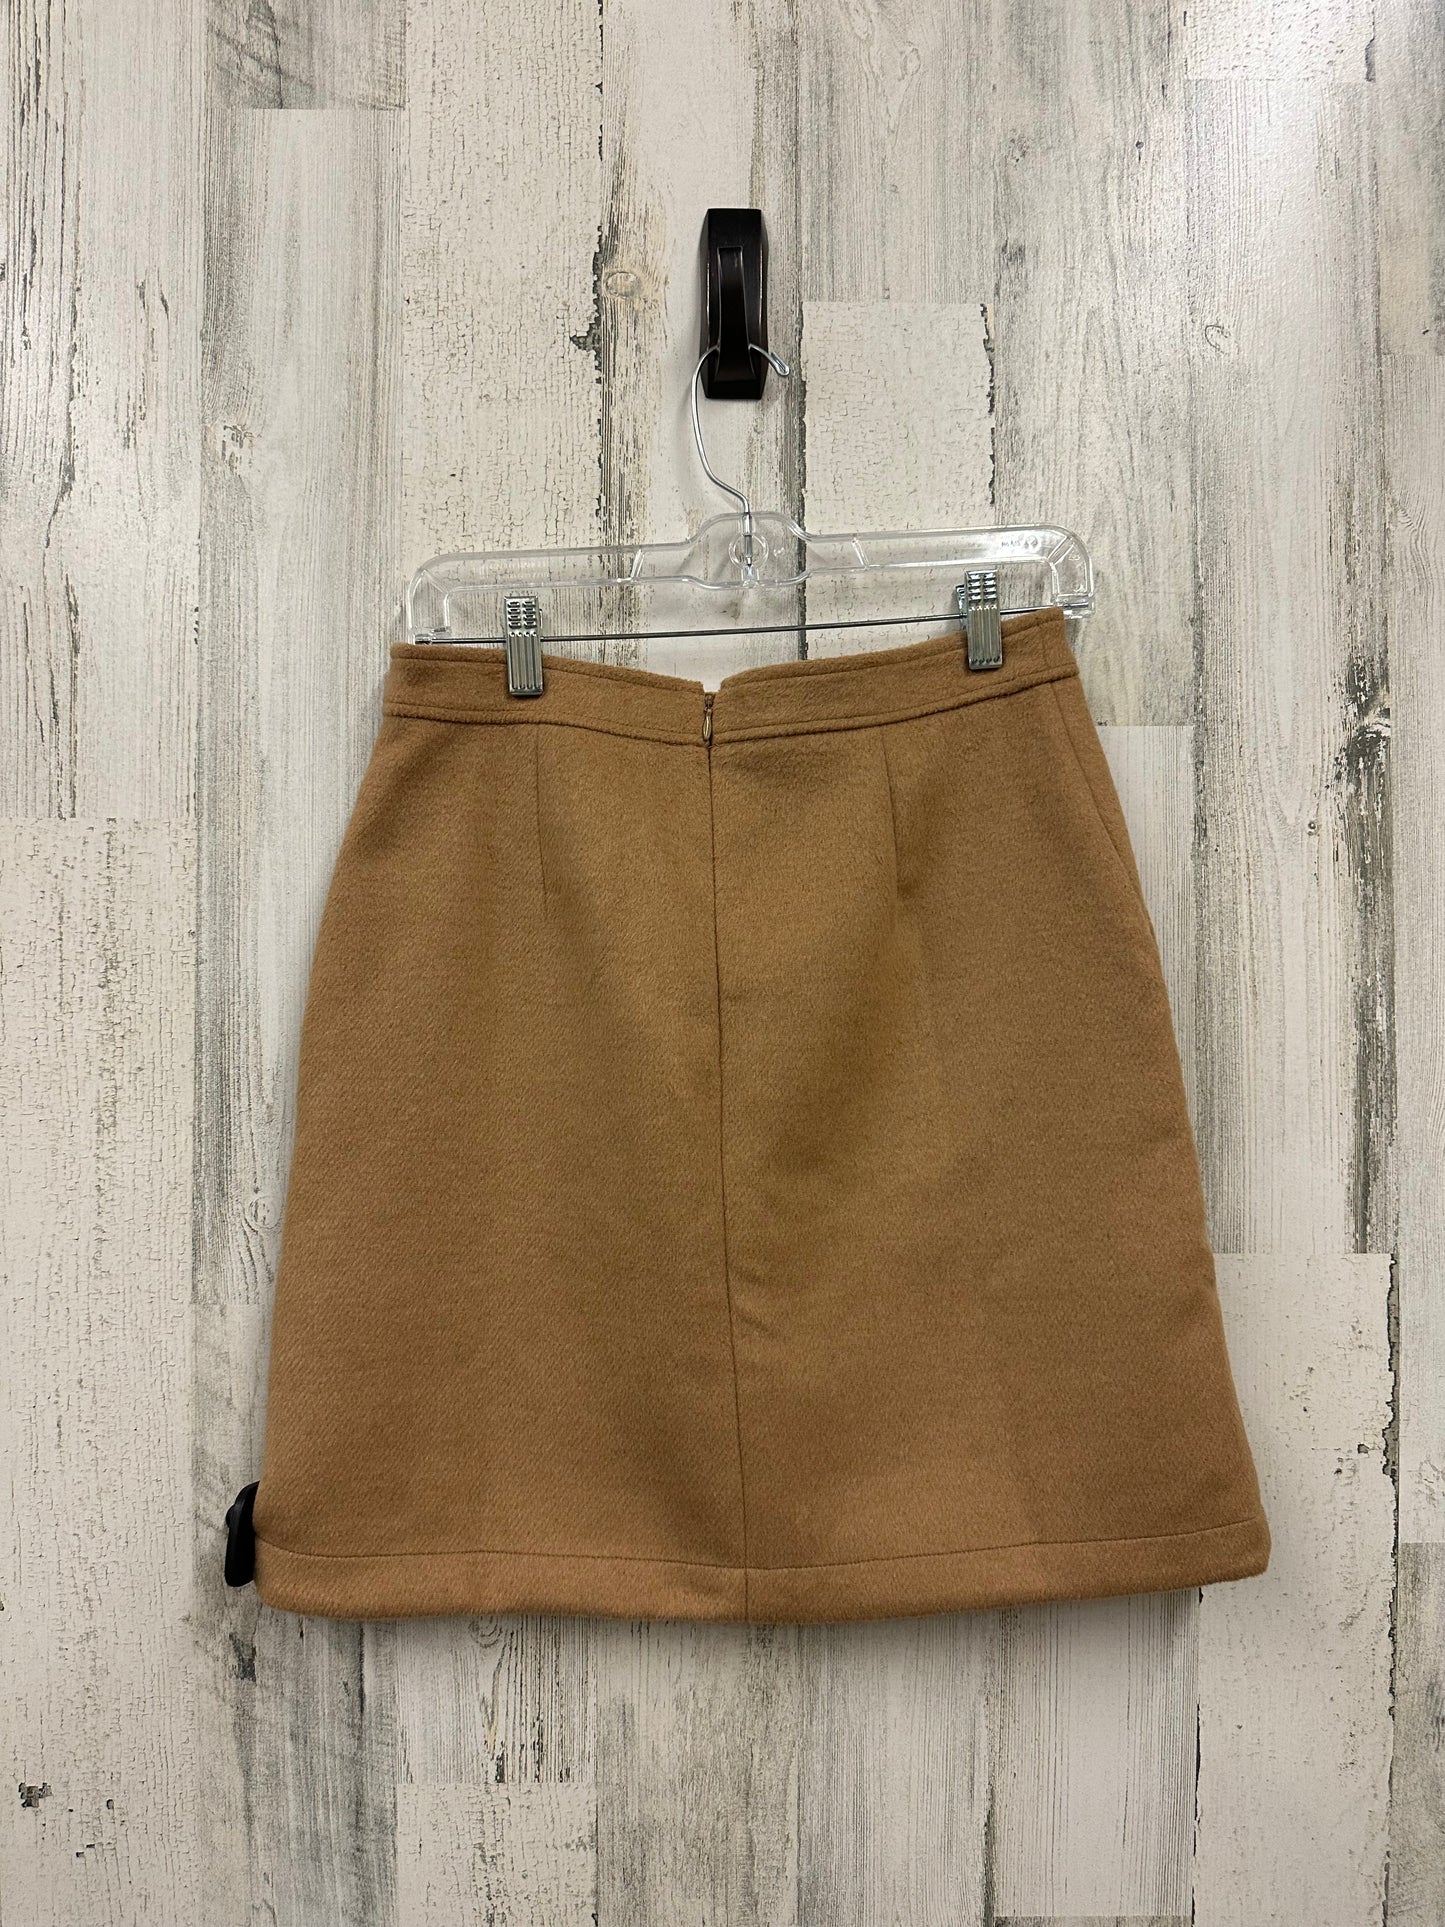 Skirt Mini & Short By Loft  Size: 0